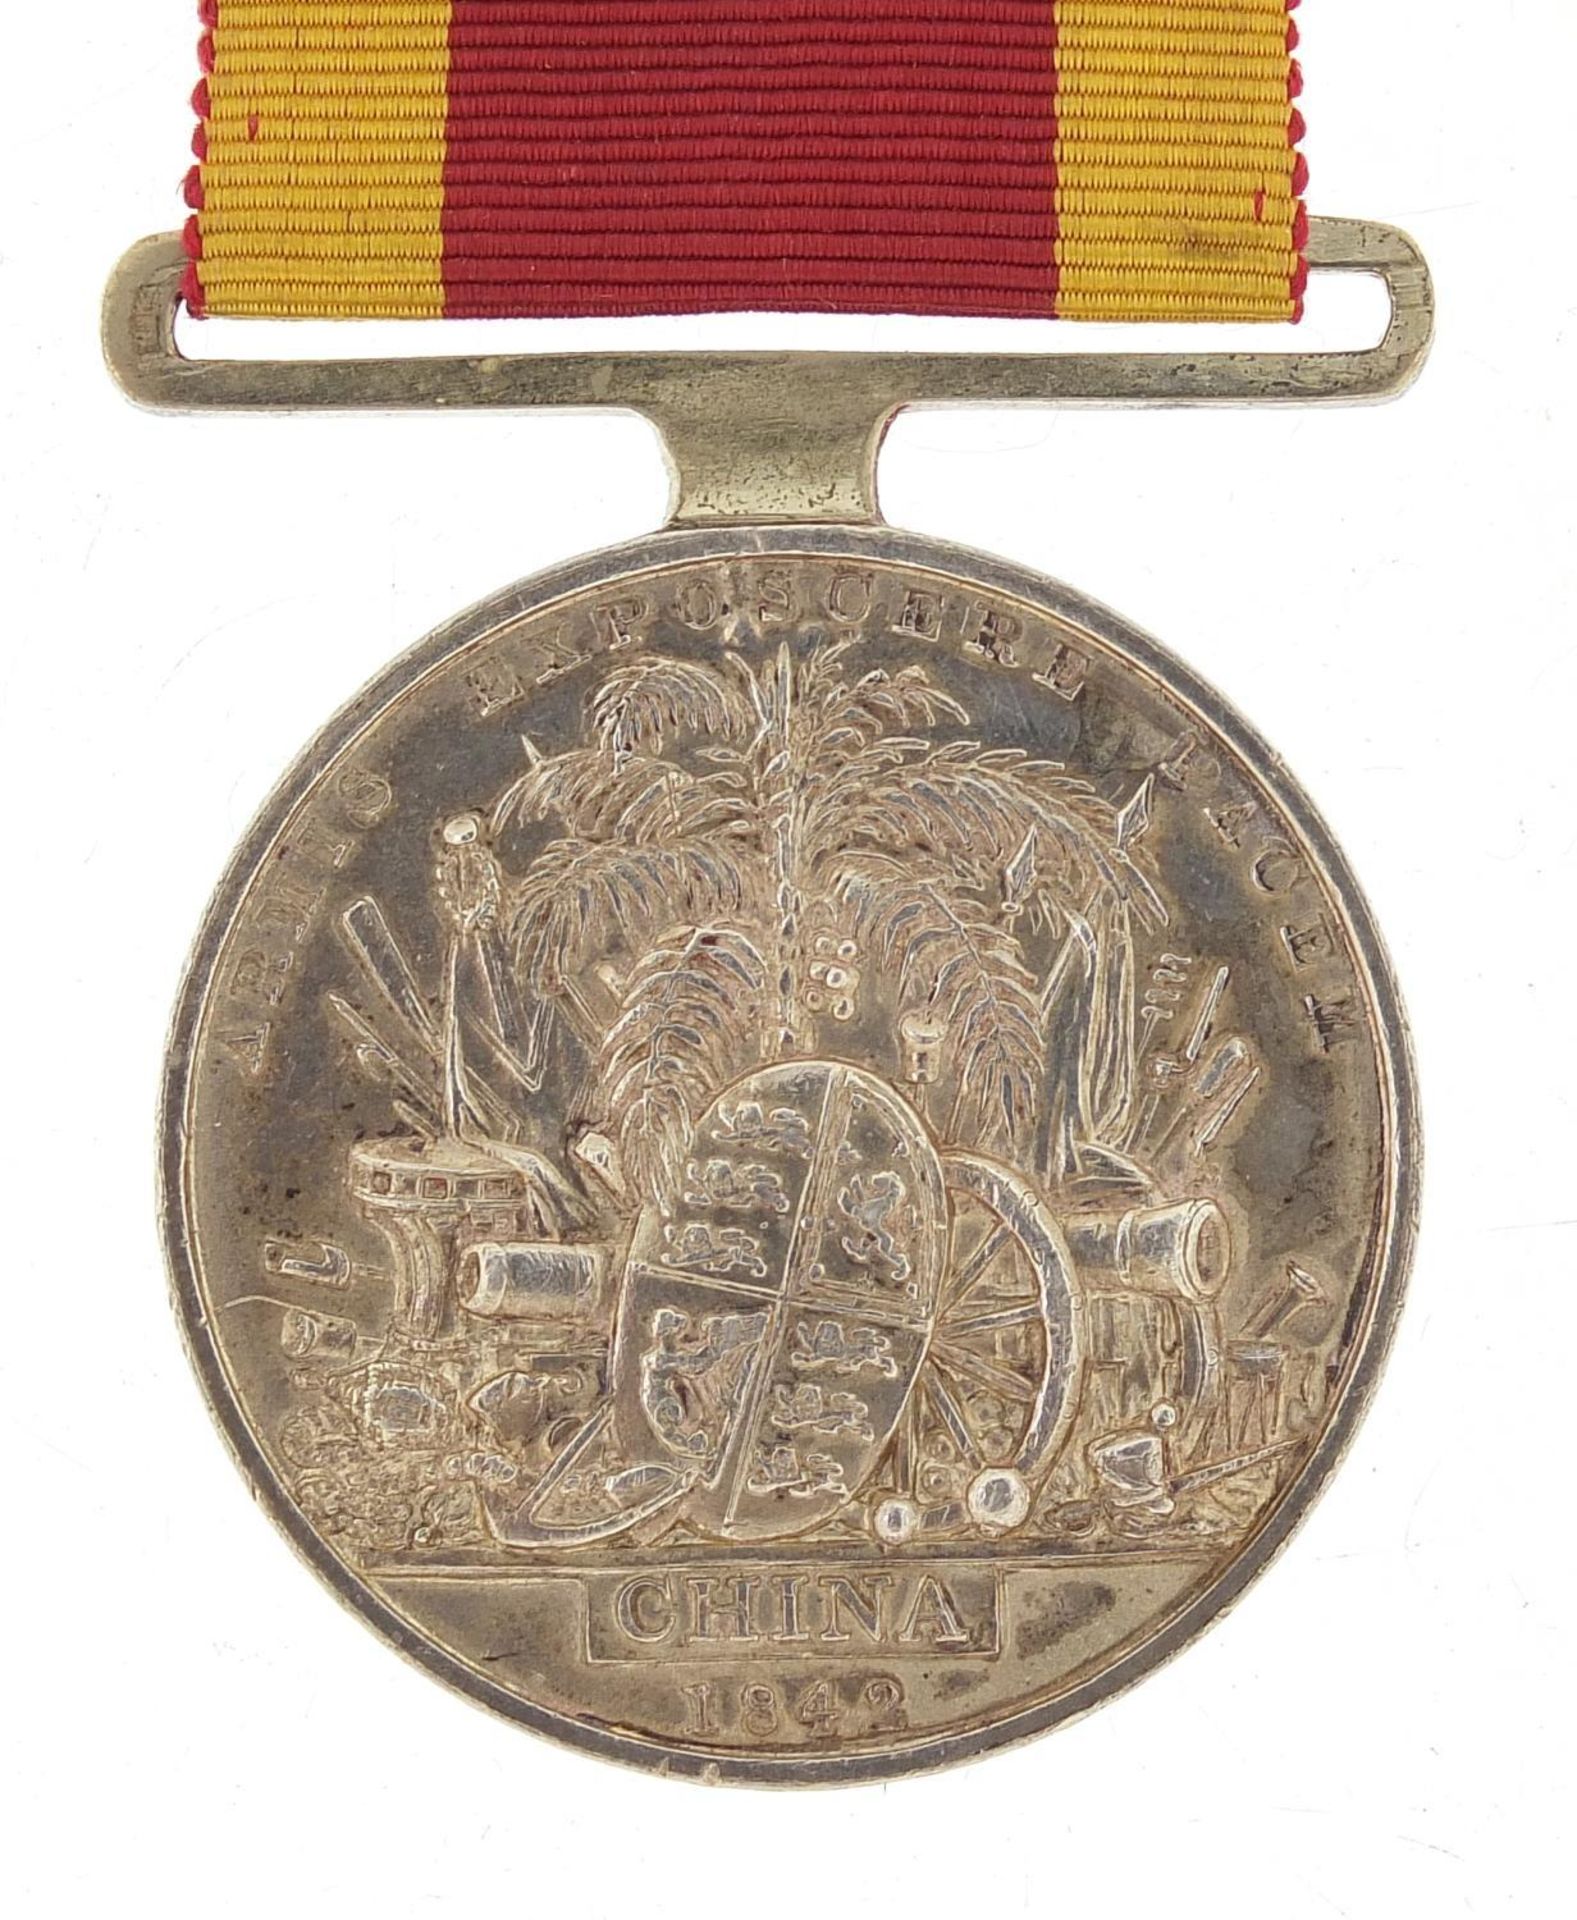 Victorian British military 1842 China War medal awarded to THOMAS BIRD HMS BLENHEIM - Image 4 of 4